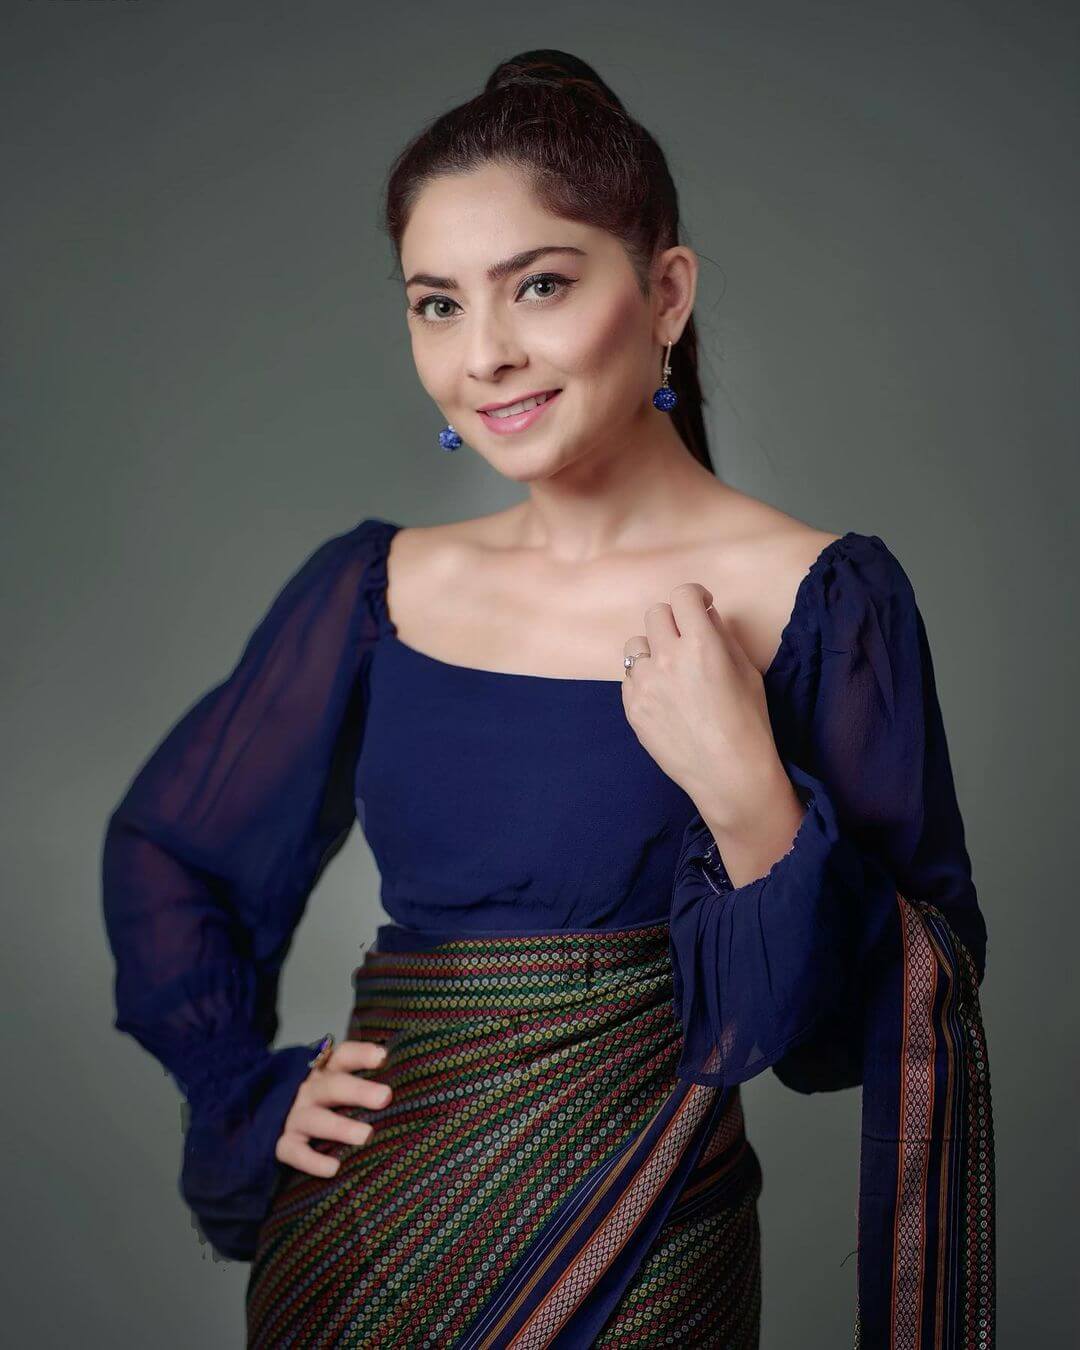 Actress Sonalee Kulkarni in dark blue outfit